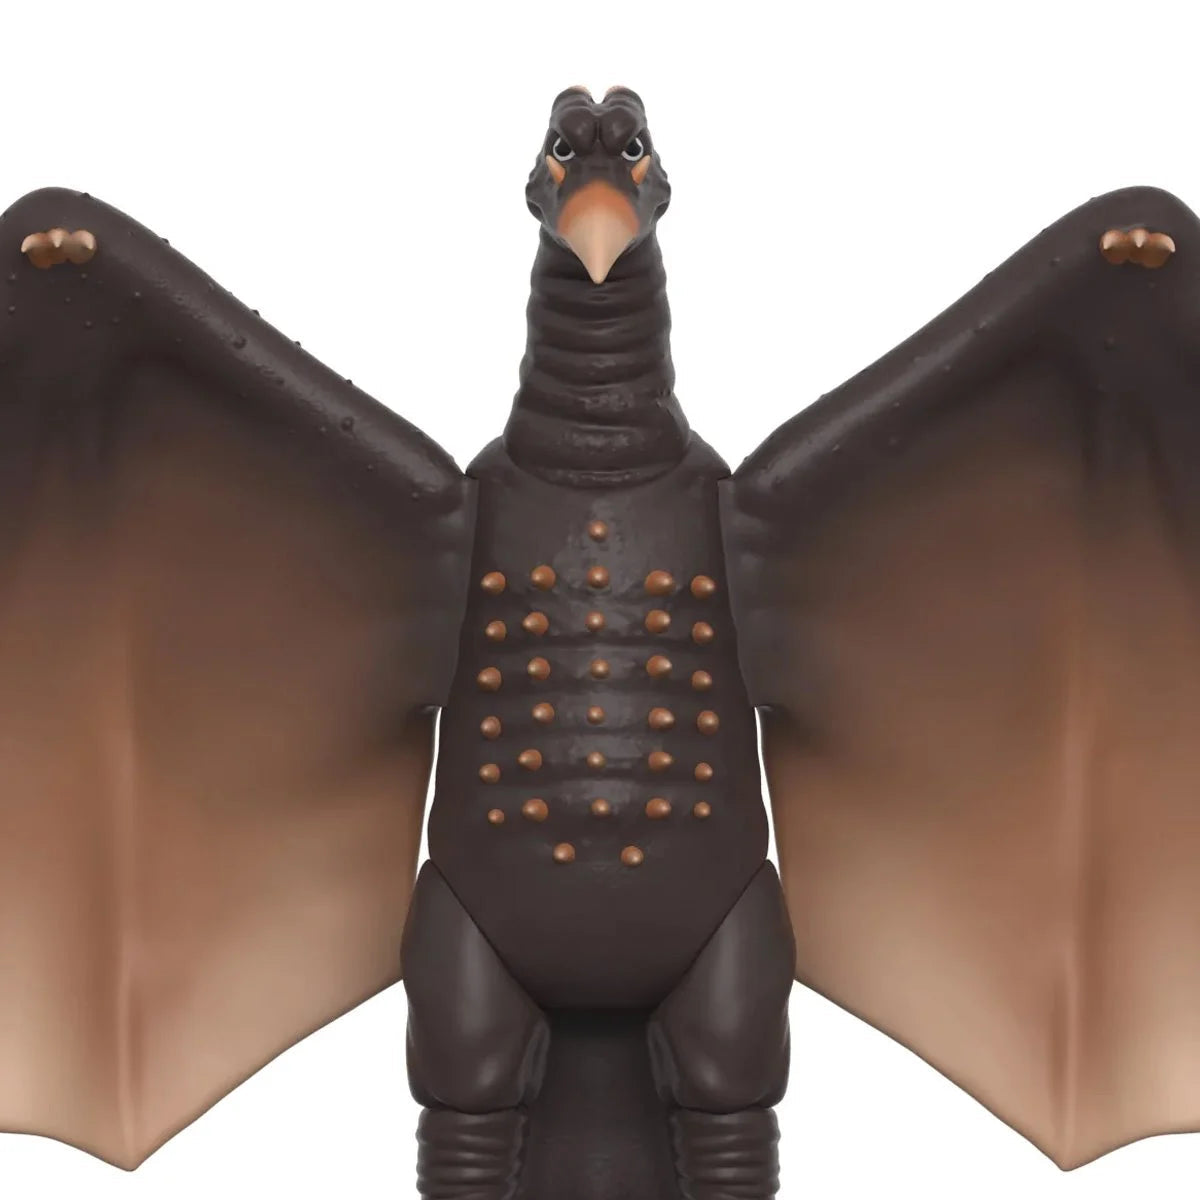 Godzilla Rodan 3 3/4-Inch ReAction Figure Hasbro Toys